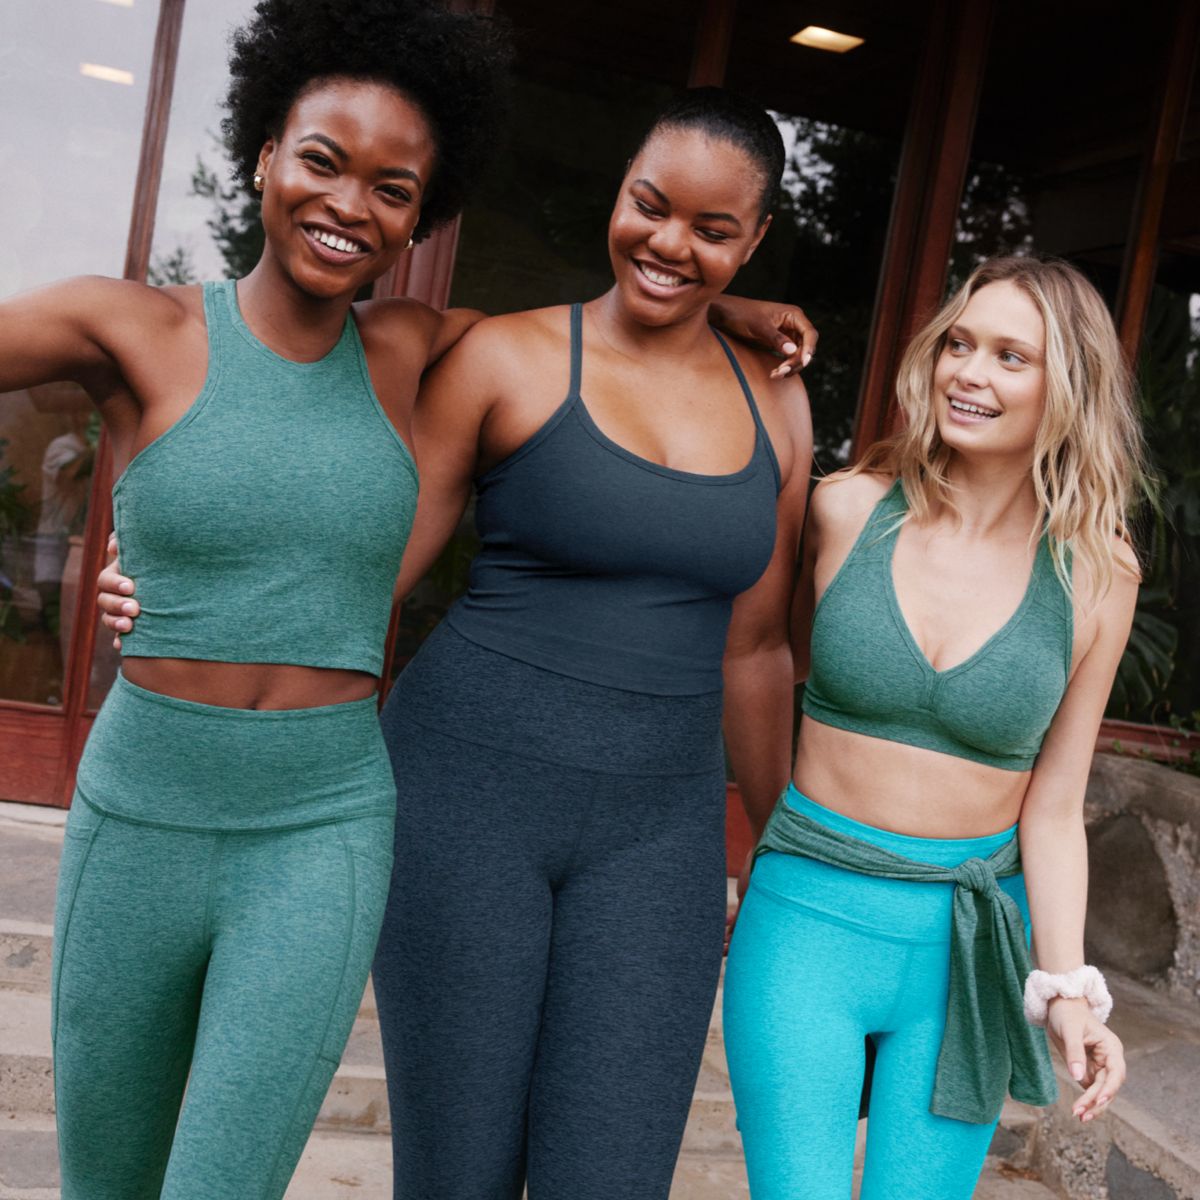 Brand Spotlight: Meet Beyond Yoga, the Activewear Brand Empowering Women